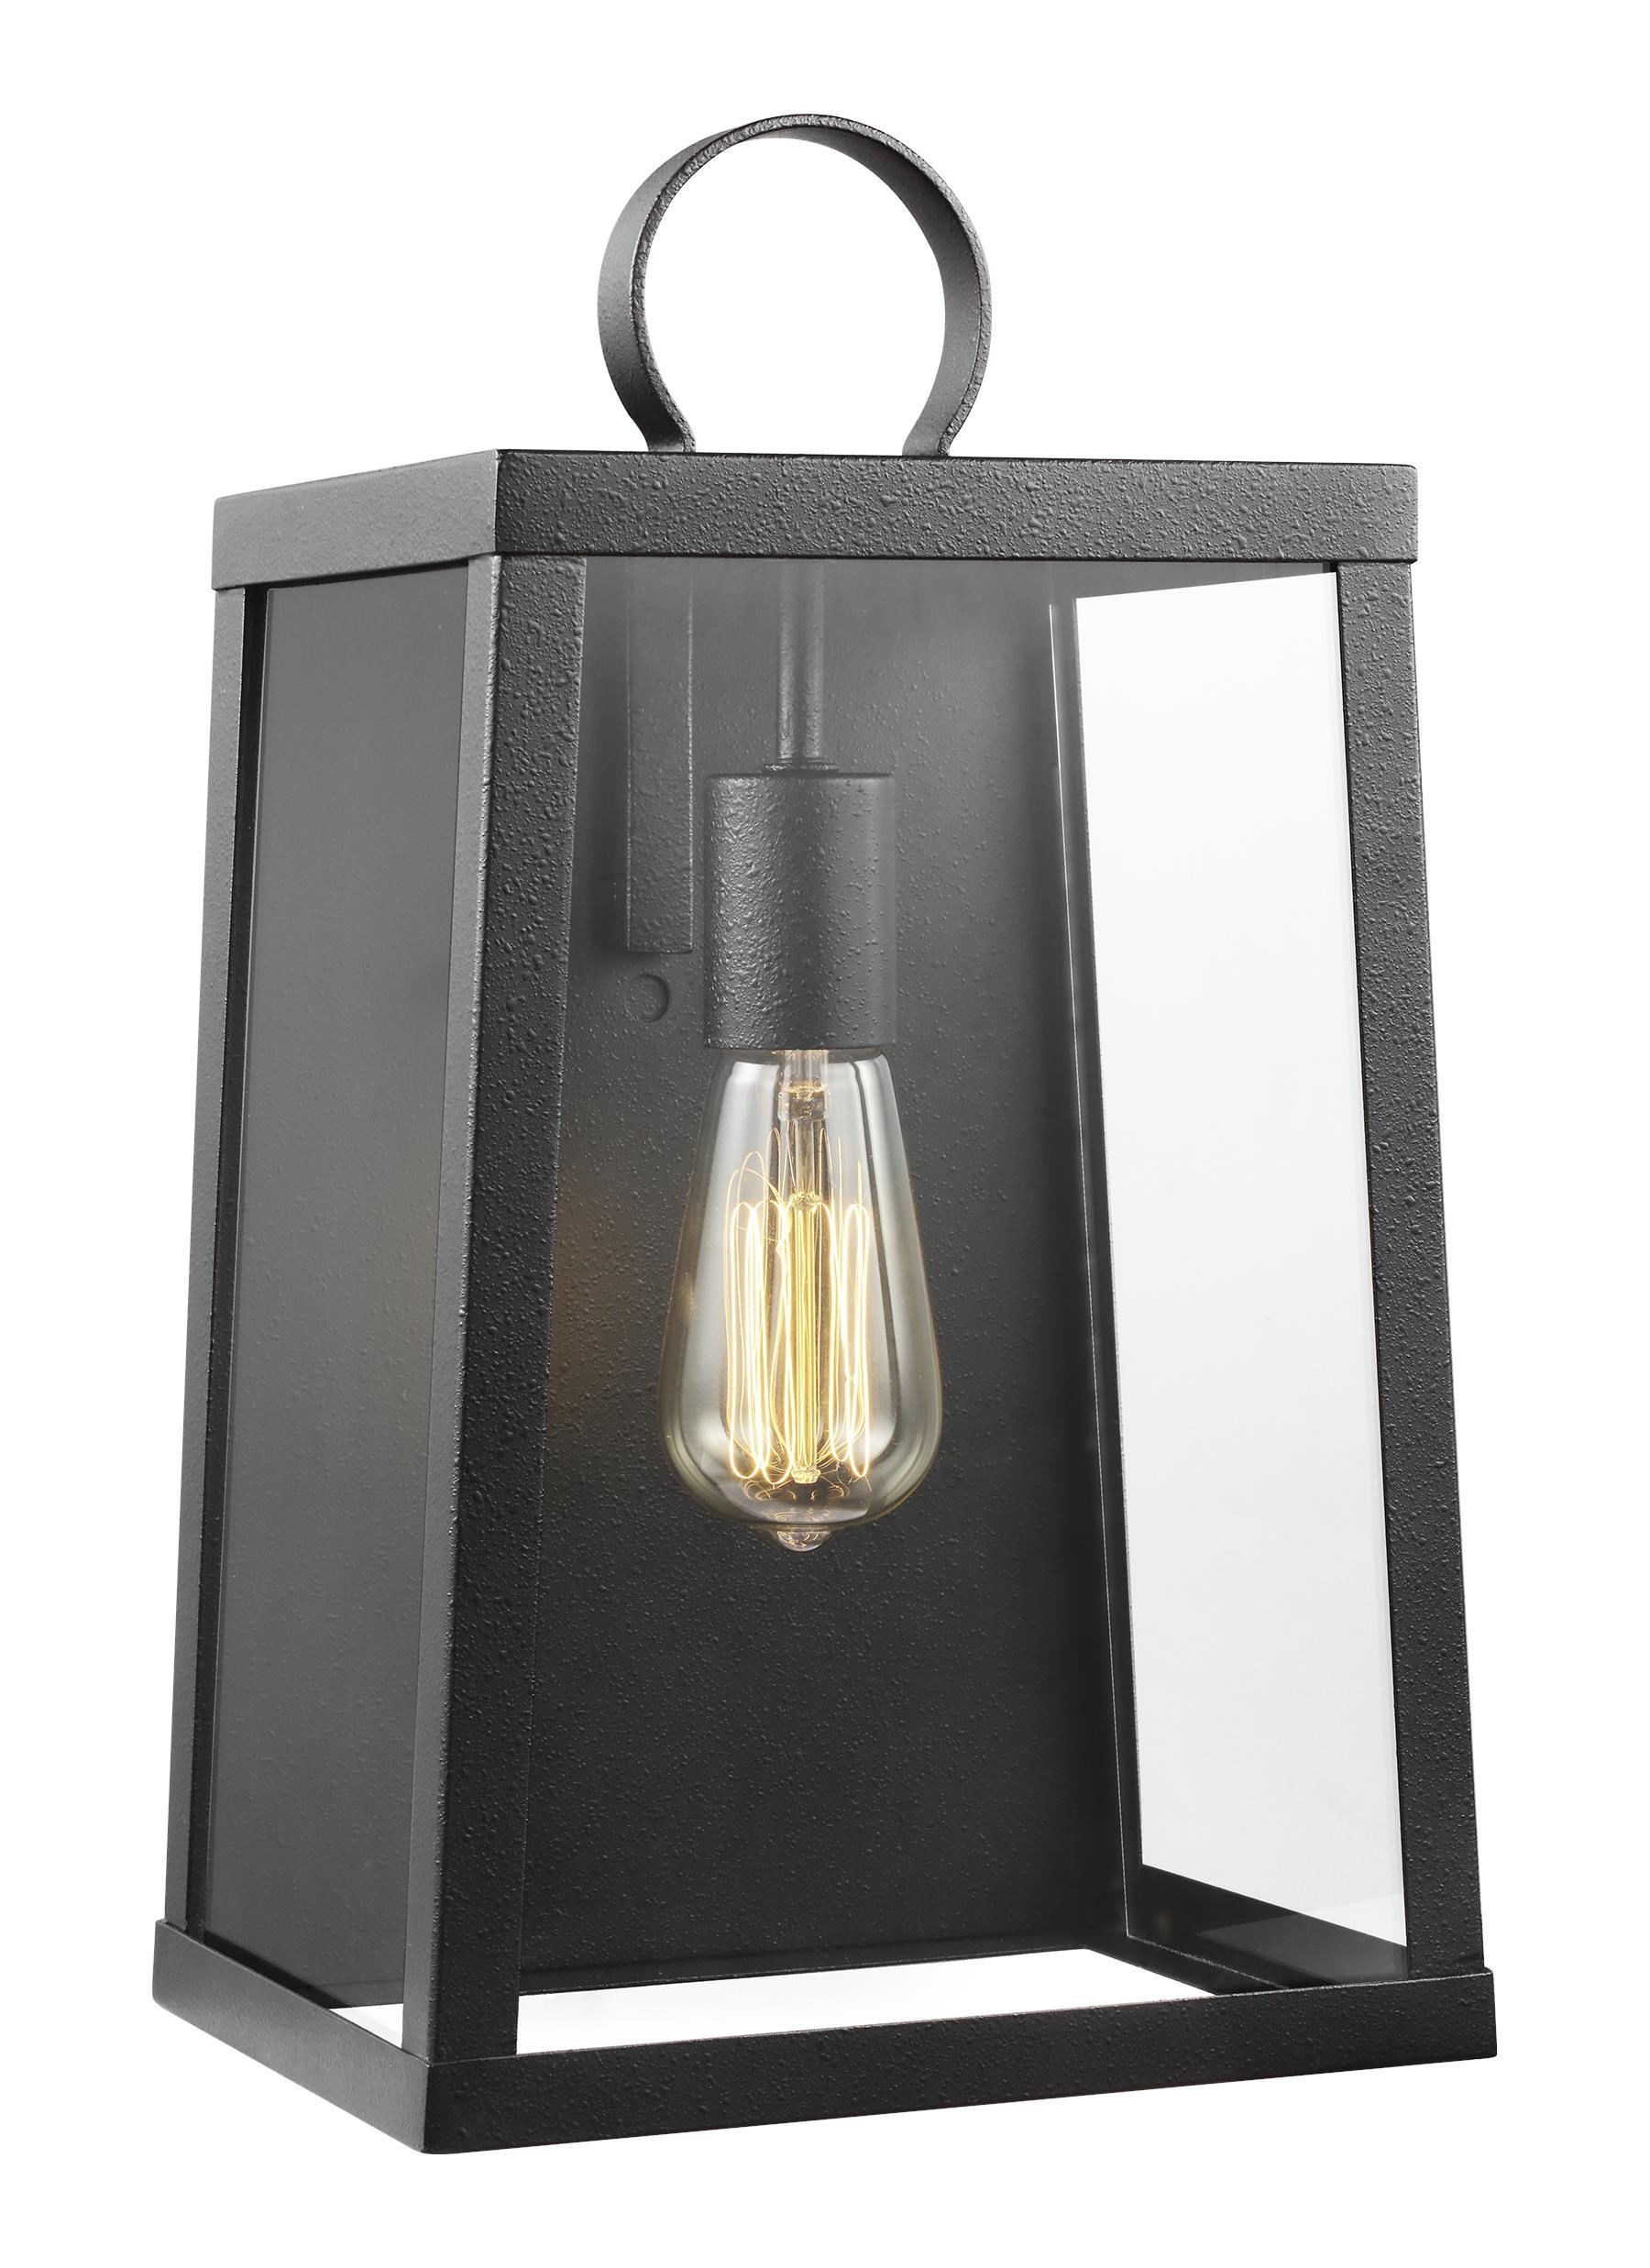 Marinus Large One Light Outdoor LED Wall Lantern - Blacksmith Outdoor Sea Gull Lighting 